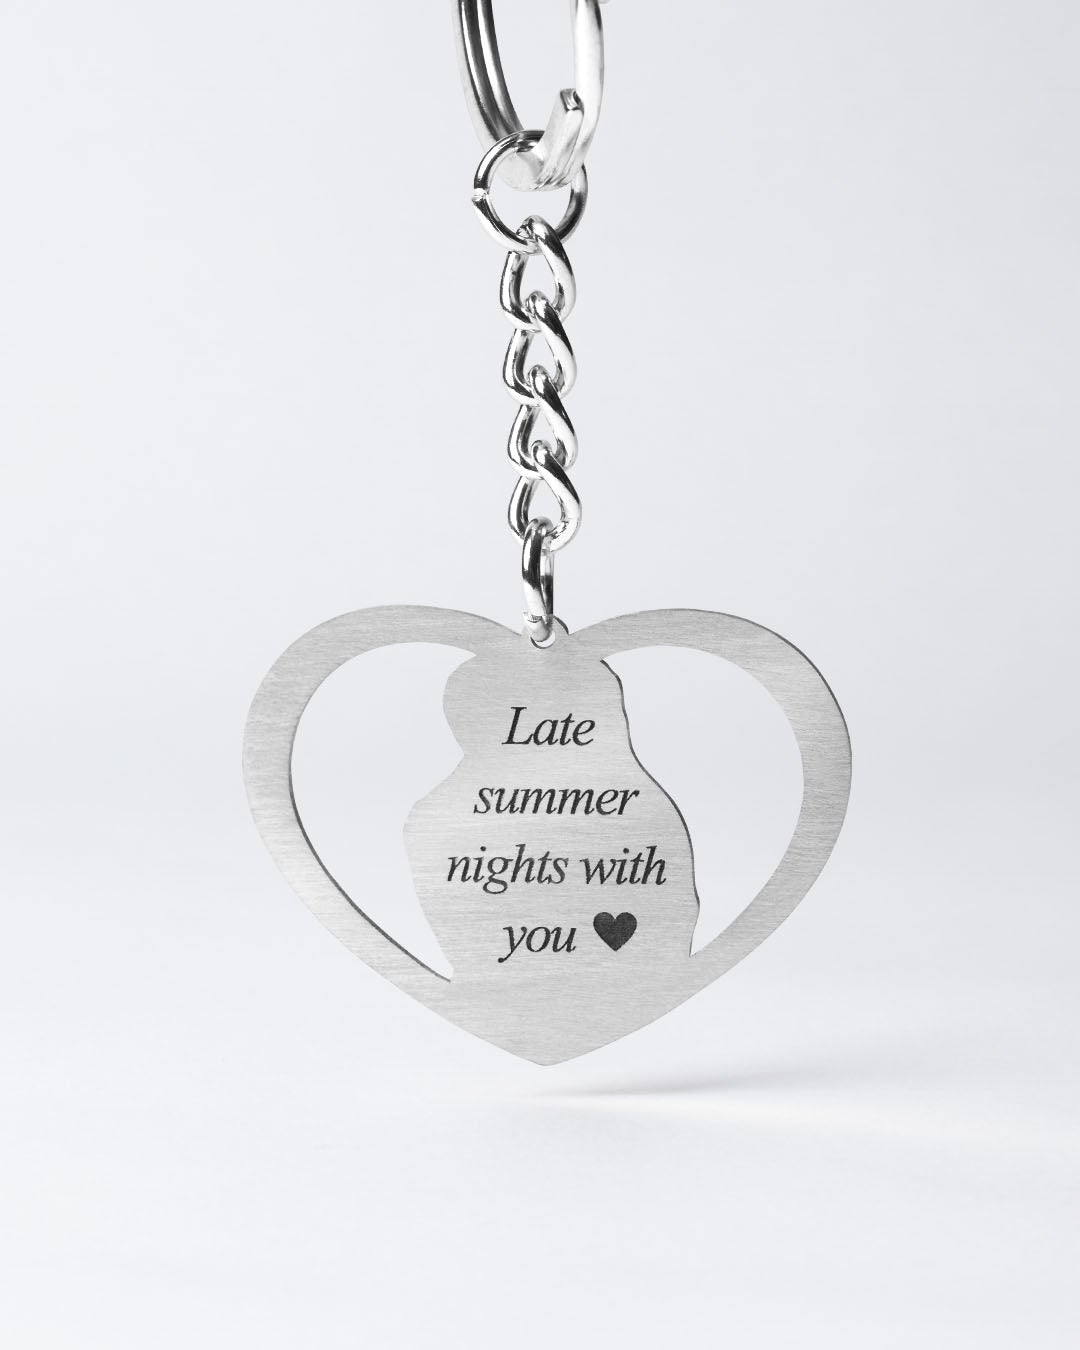 Memorial jewellery, halo heart keychain engraving